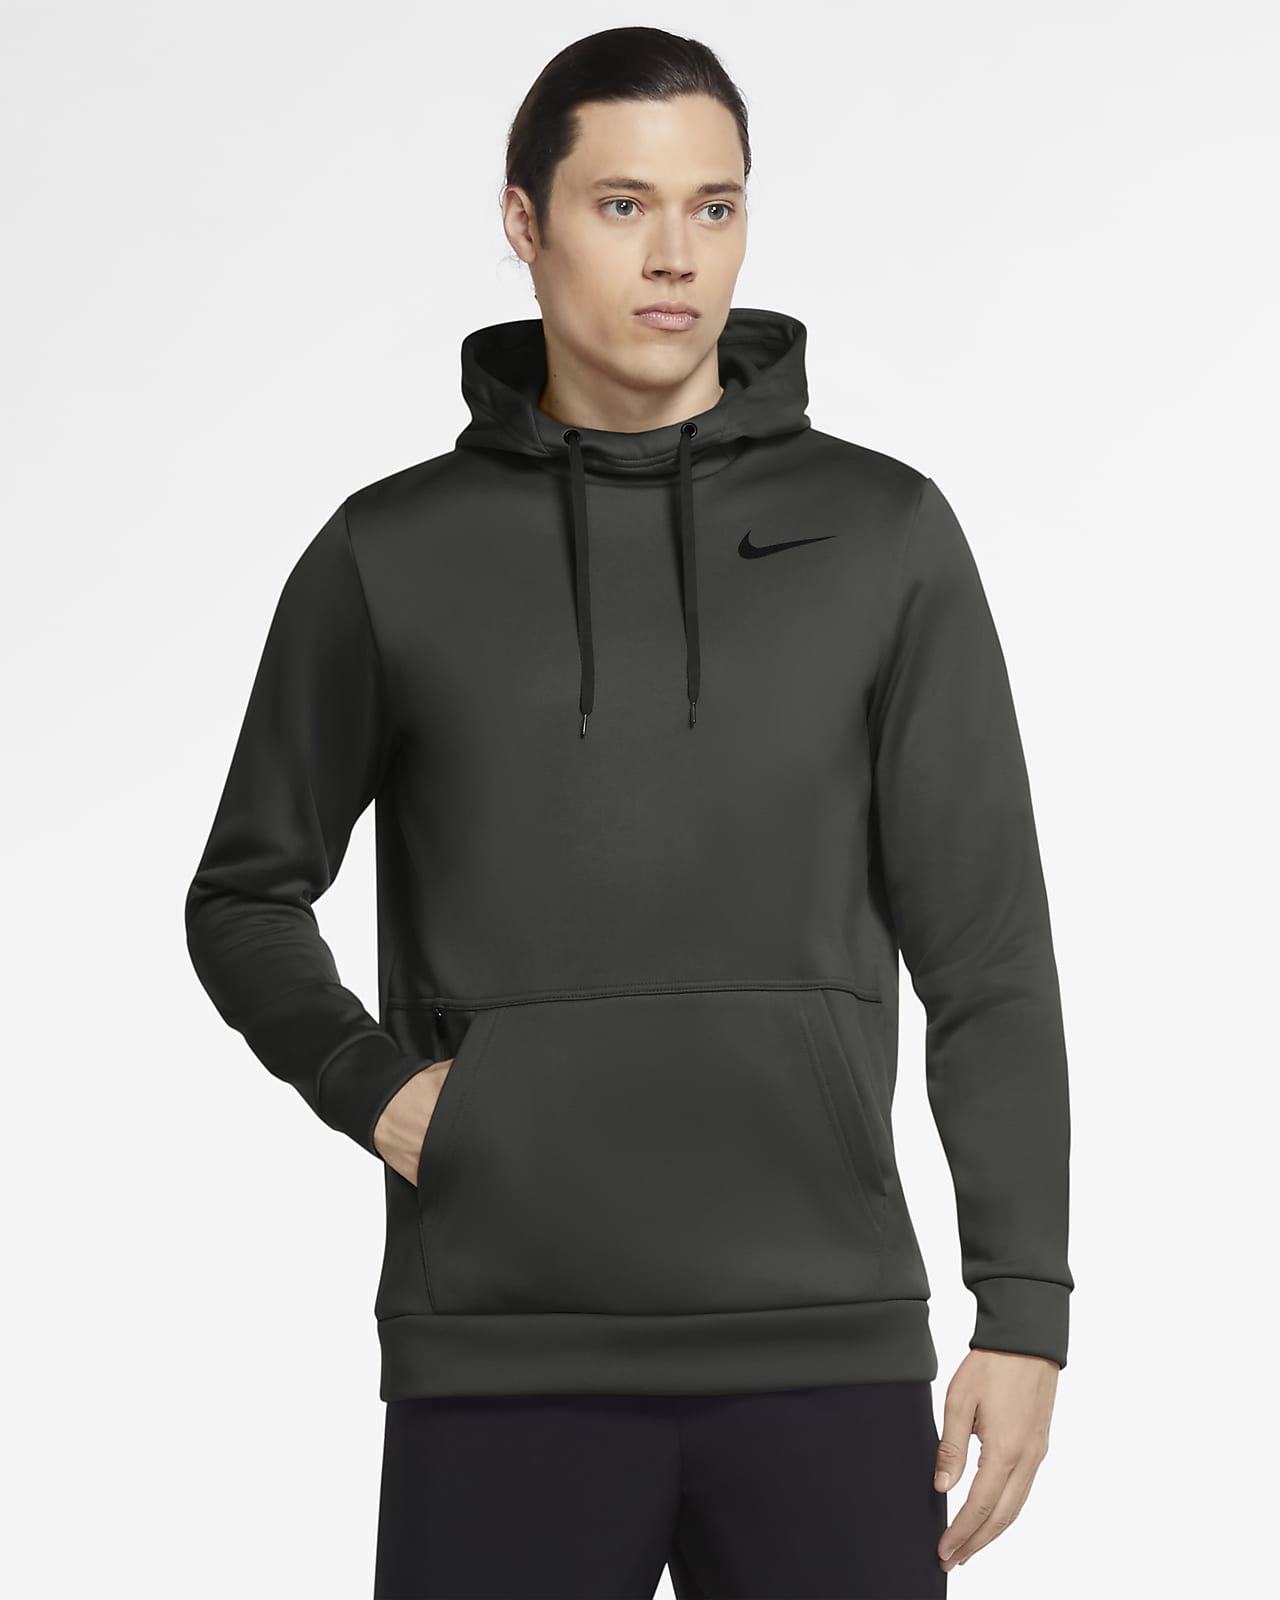 men's pullover training hoodie nike therma